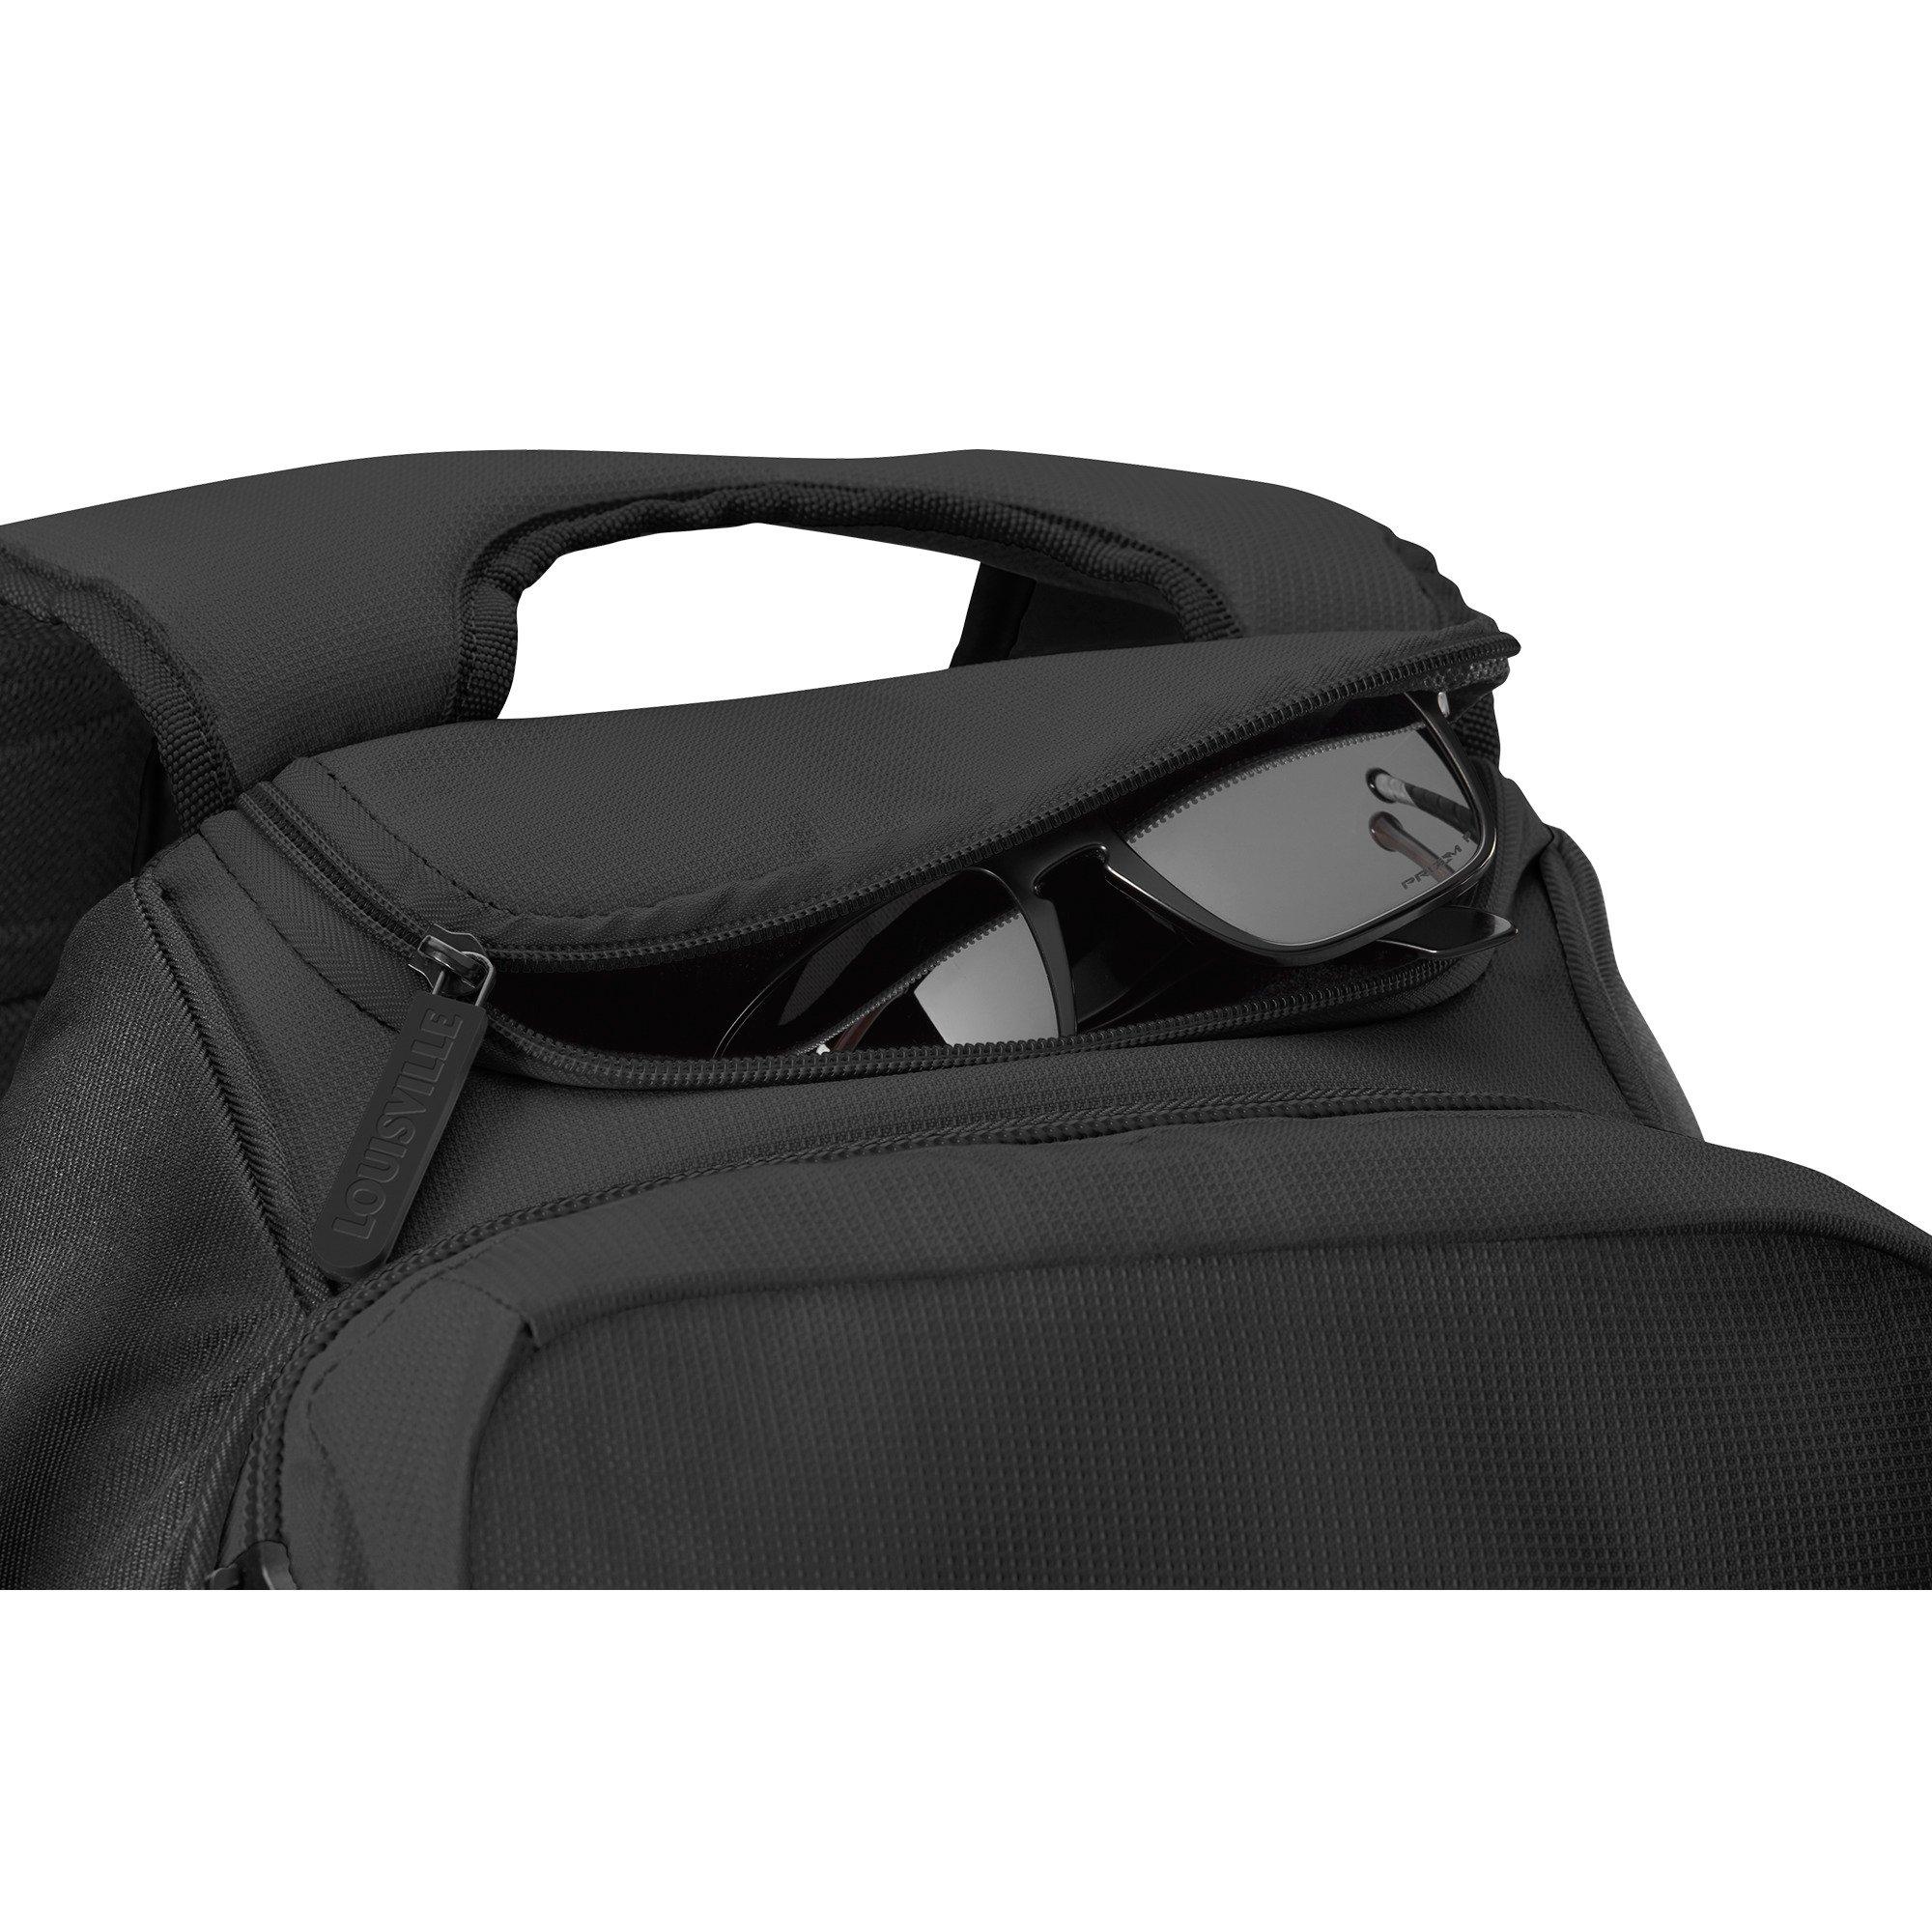 Louisville Slugger Prime Stick Pack Backpack - household items - by owner -  housewares sale - craigslist